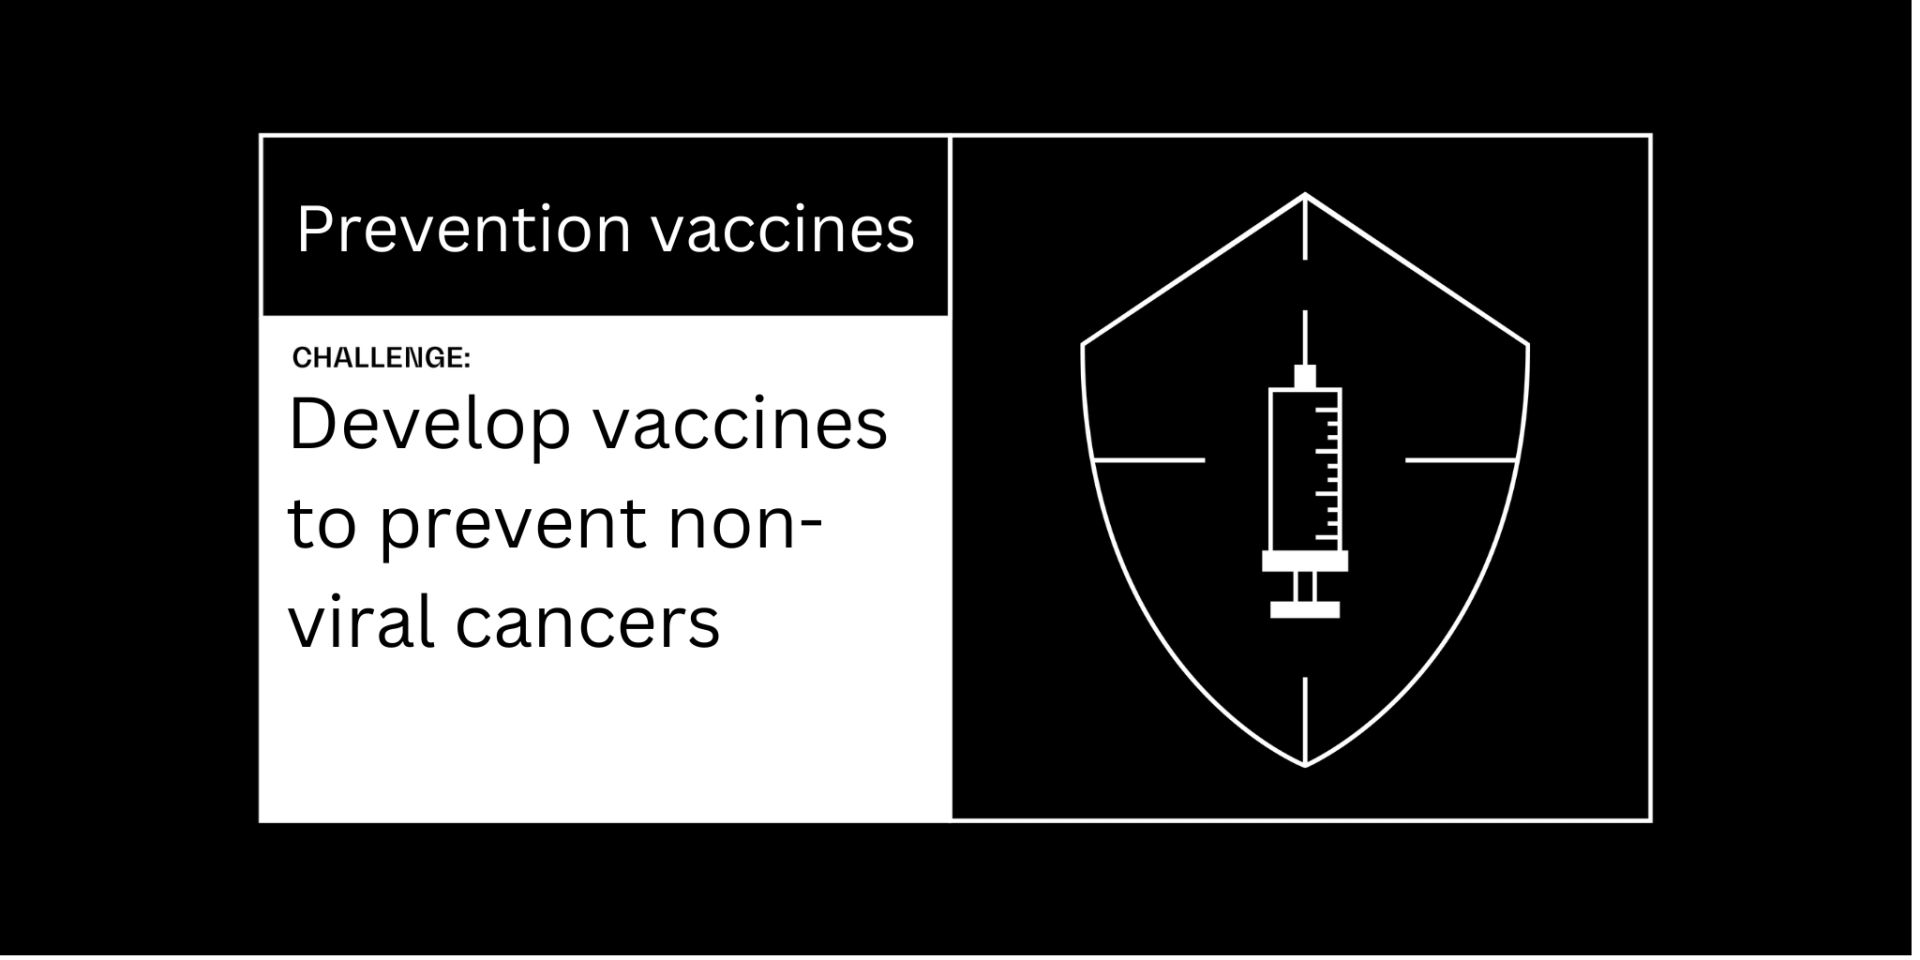 Prevention vaccines challenge